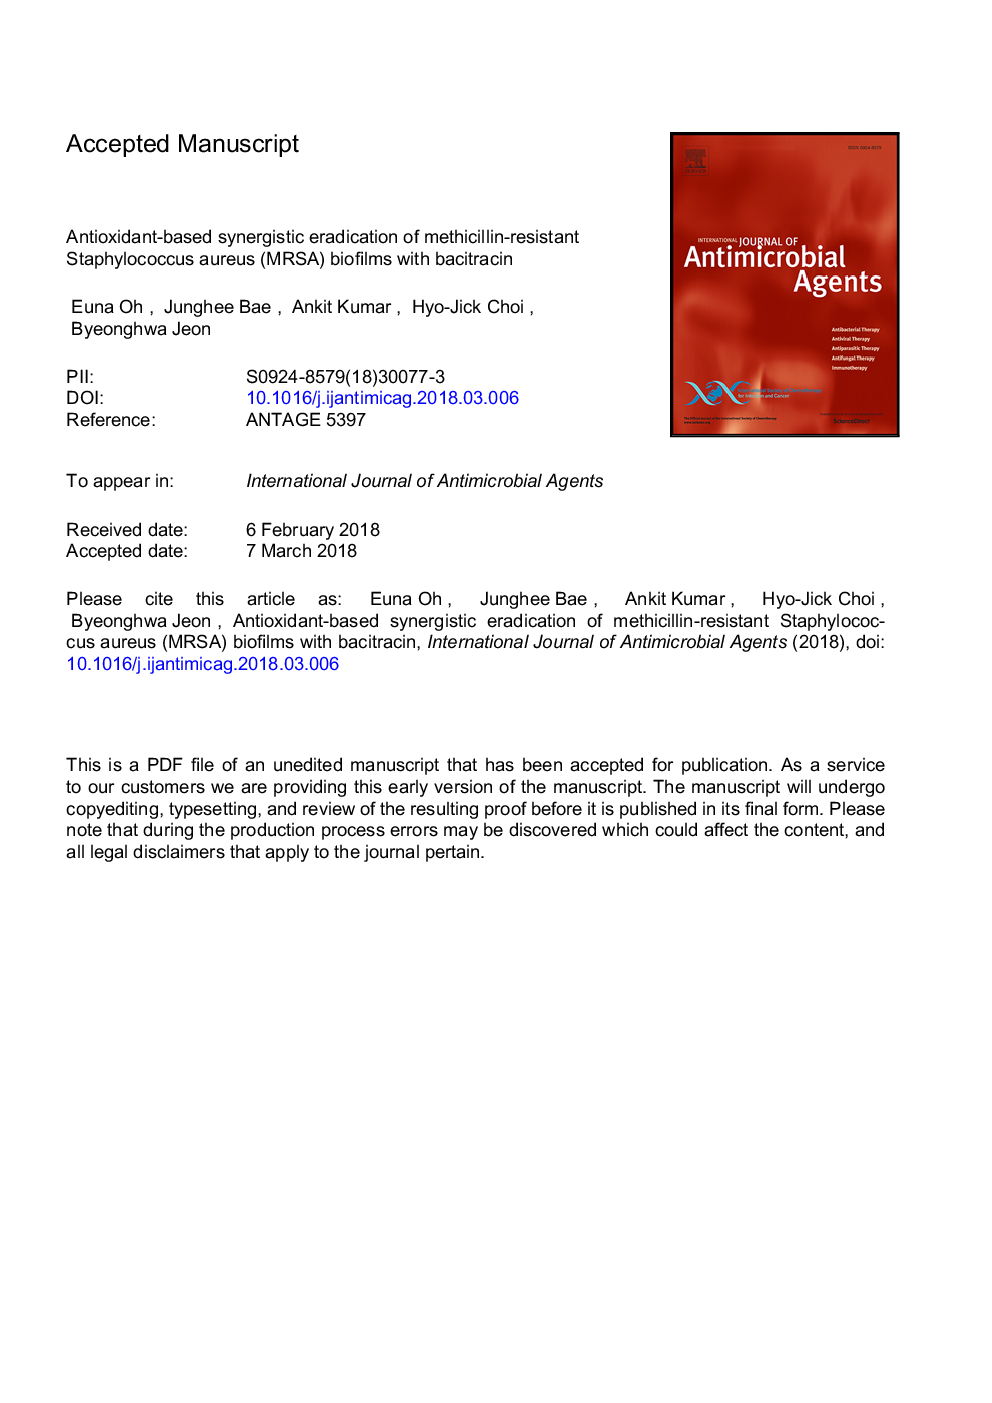 Antioxidant-based synergistic eradication of methicillin-resistant Staphylococcus aureus (MRSA) biofilms with bacitracin